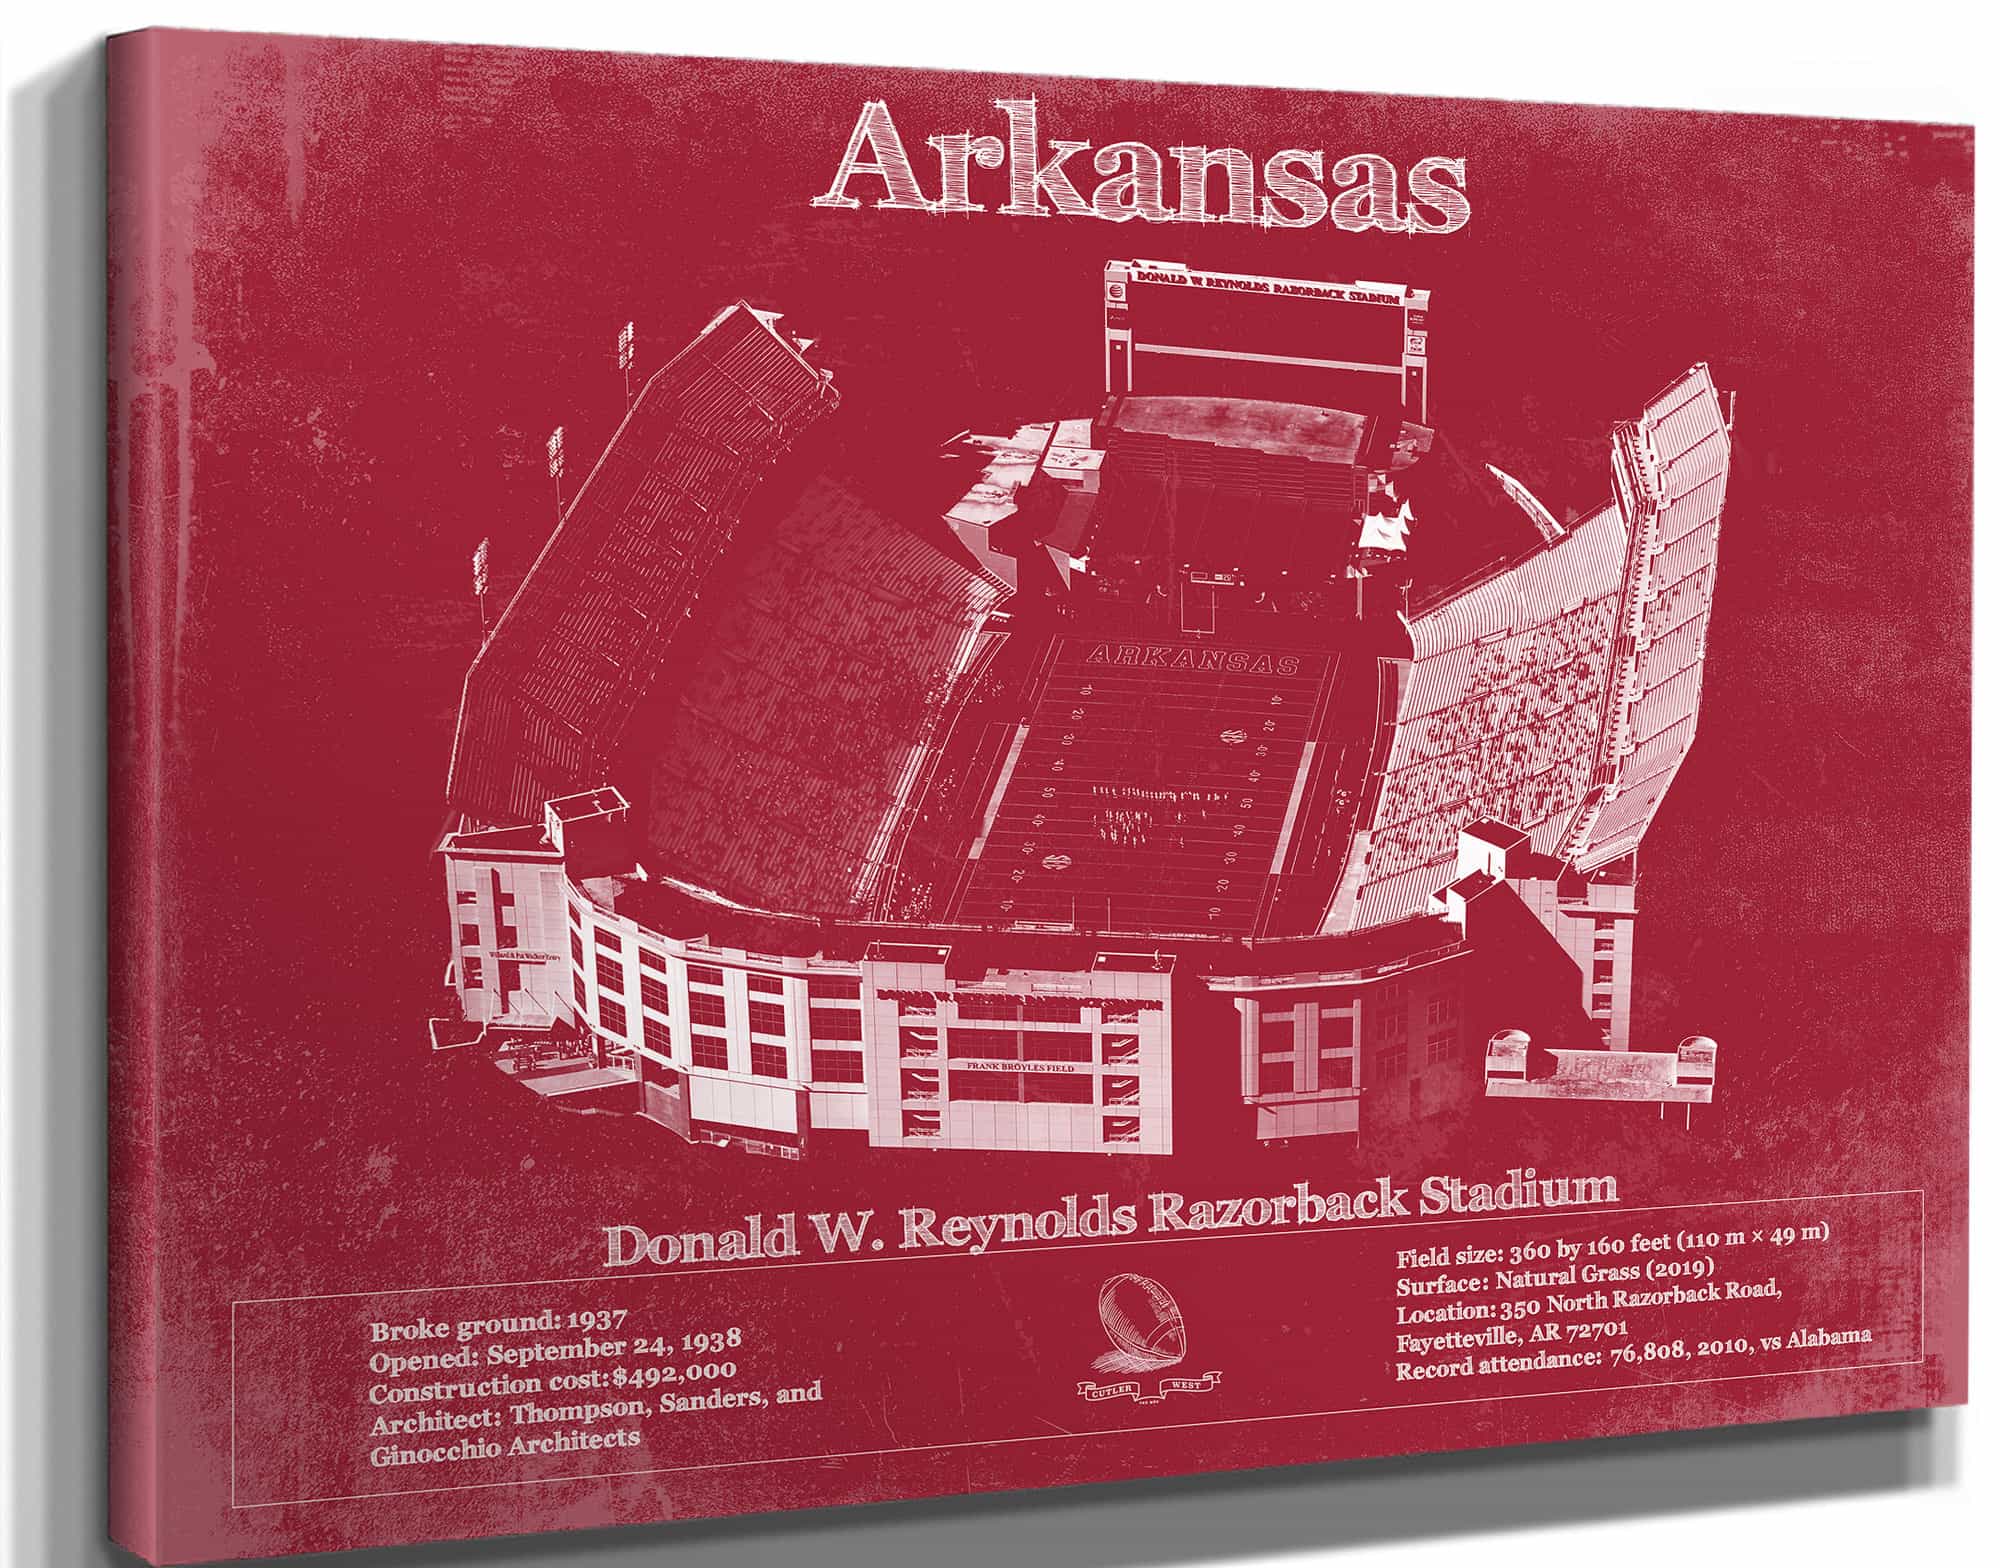 Donald W. Reynolds Razorback Stadium Art - Arkansas Razorbacks Football Art